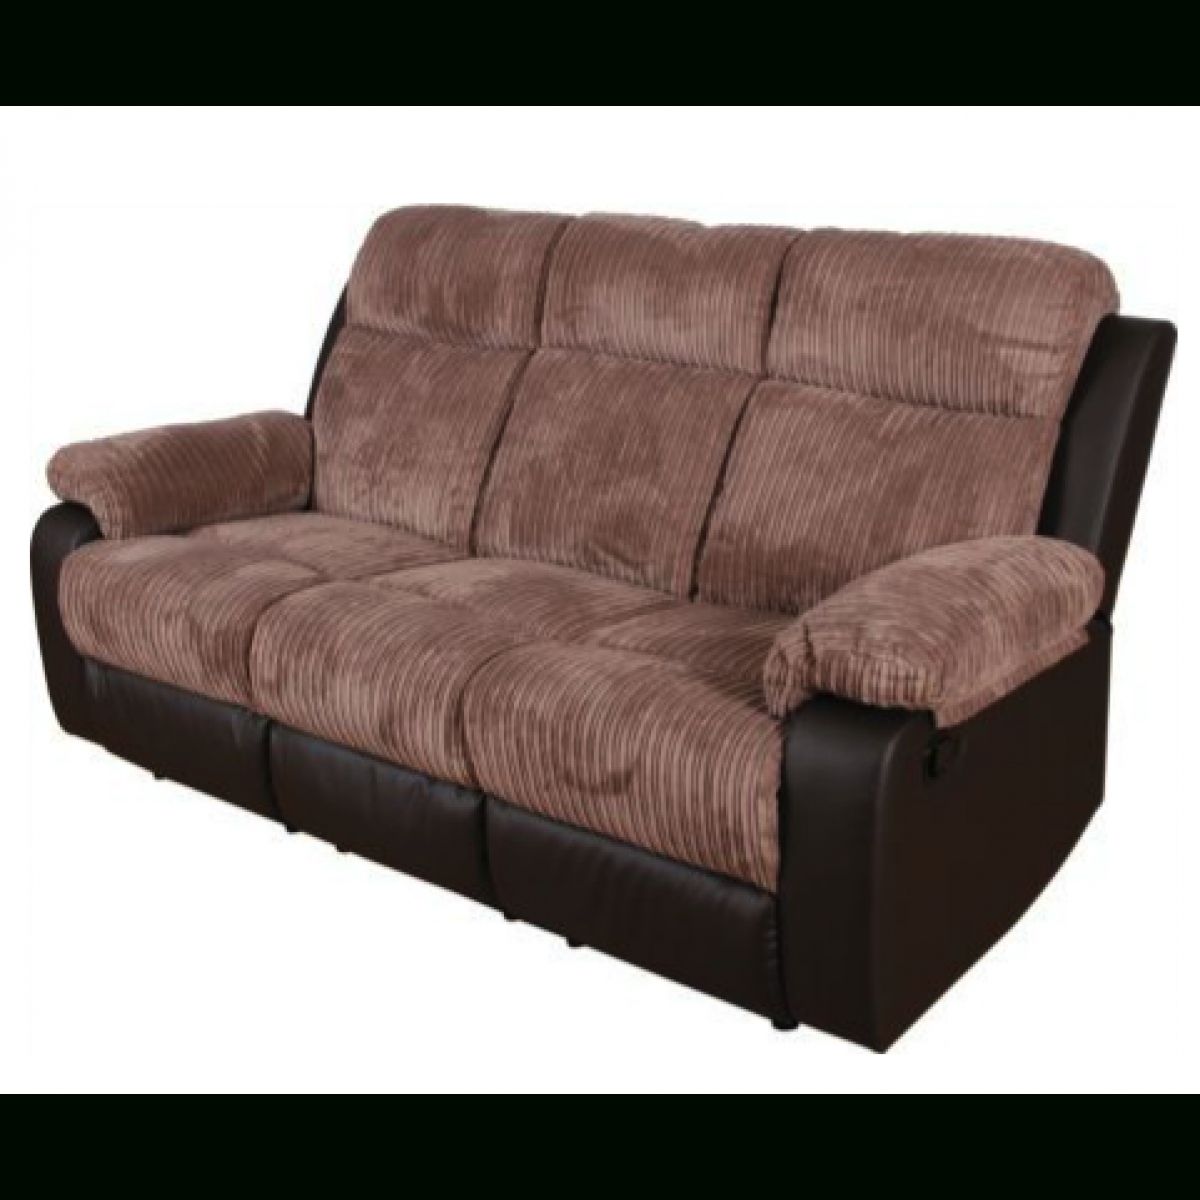 Bradley Large Fabric Recliner Sofa – Natural (View 8 of 10)